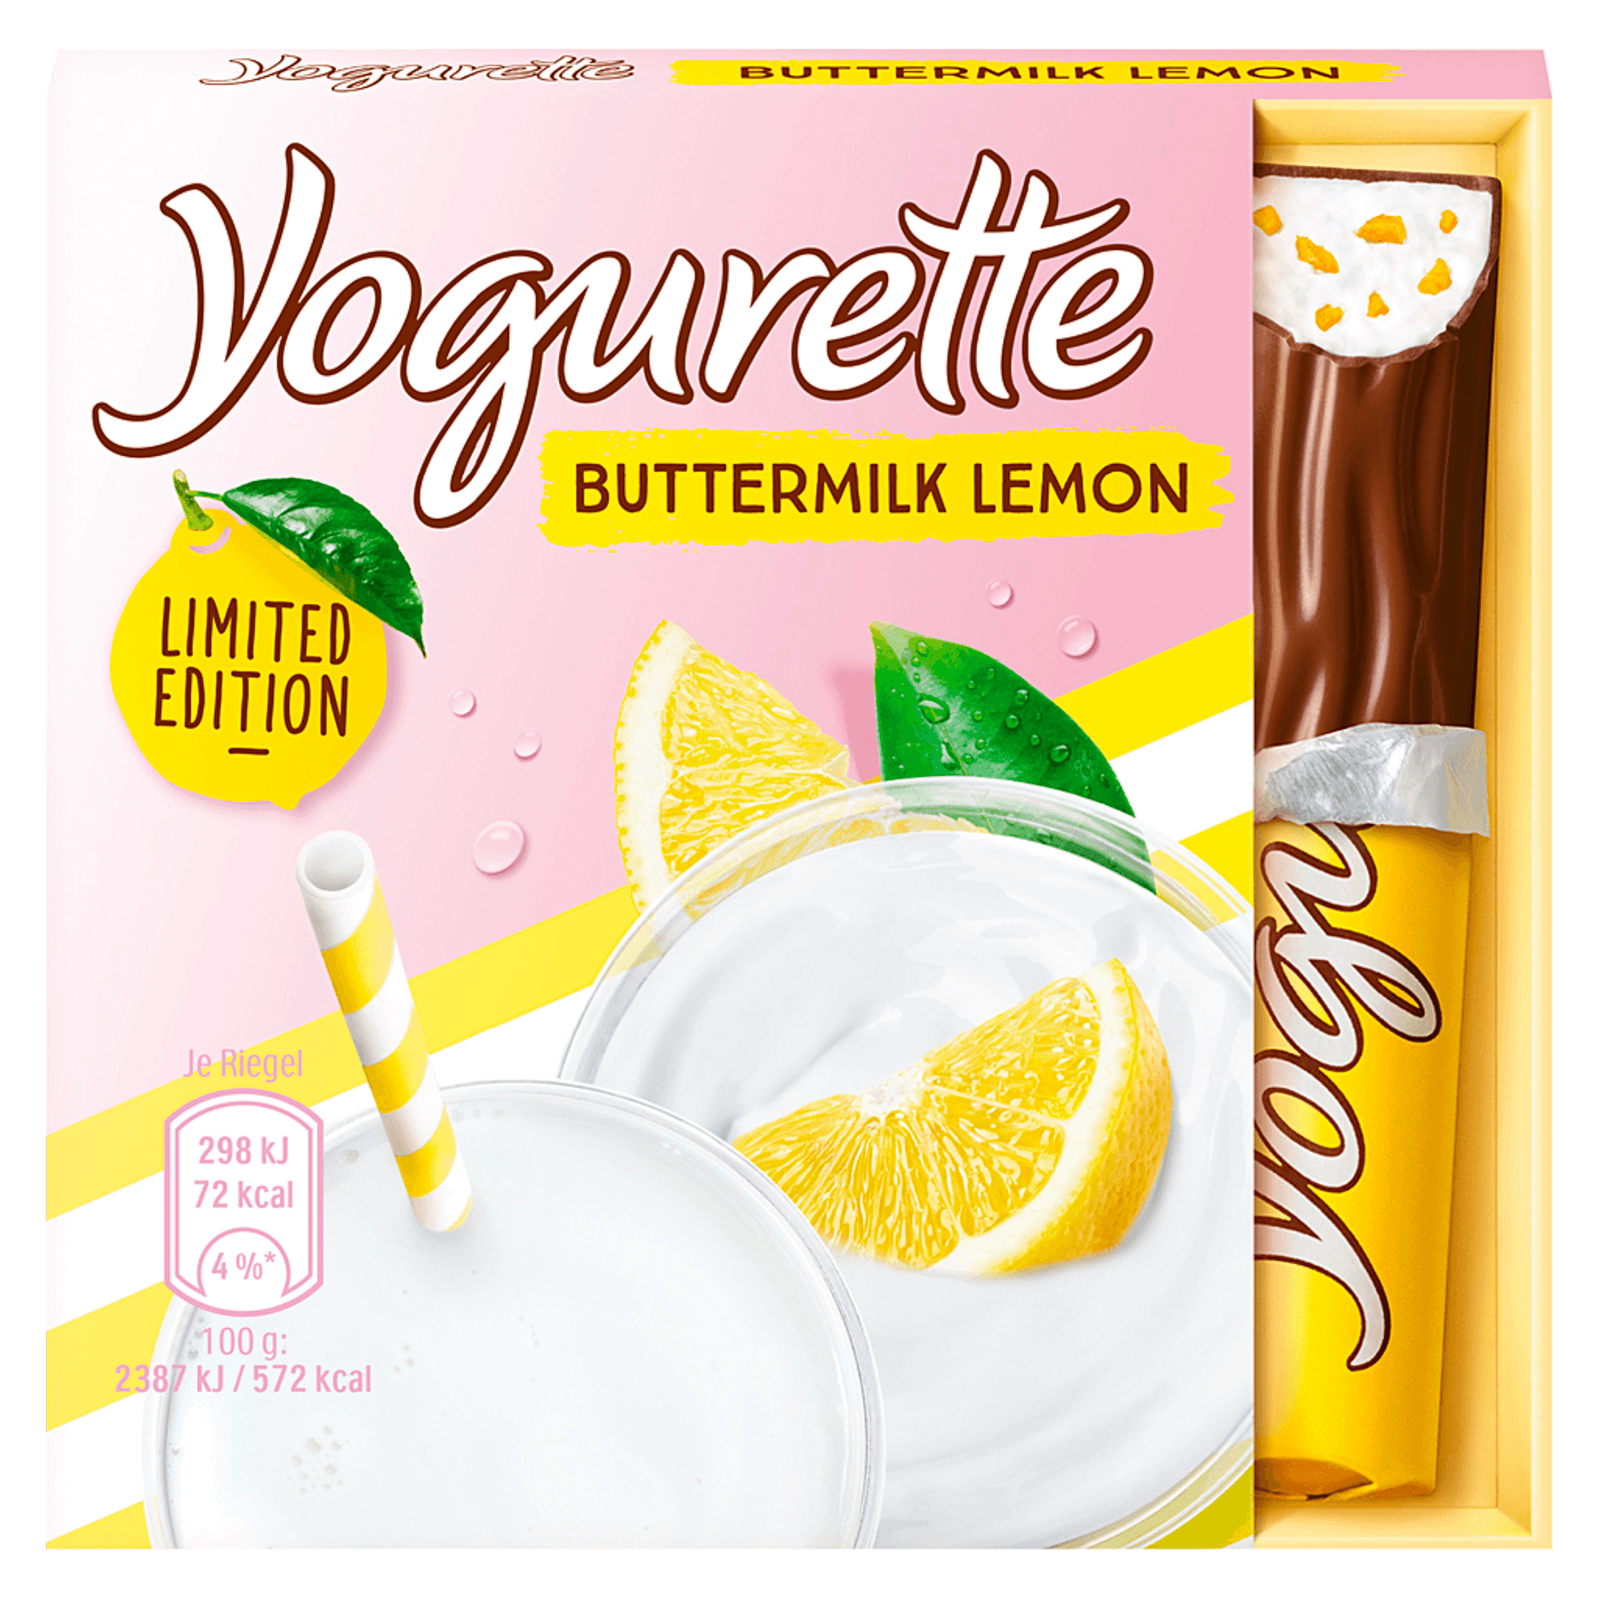 Yogurette Buttermilk Lemon 50g bei REWE online bestellen!